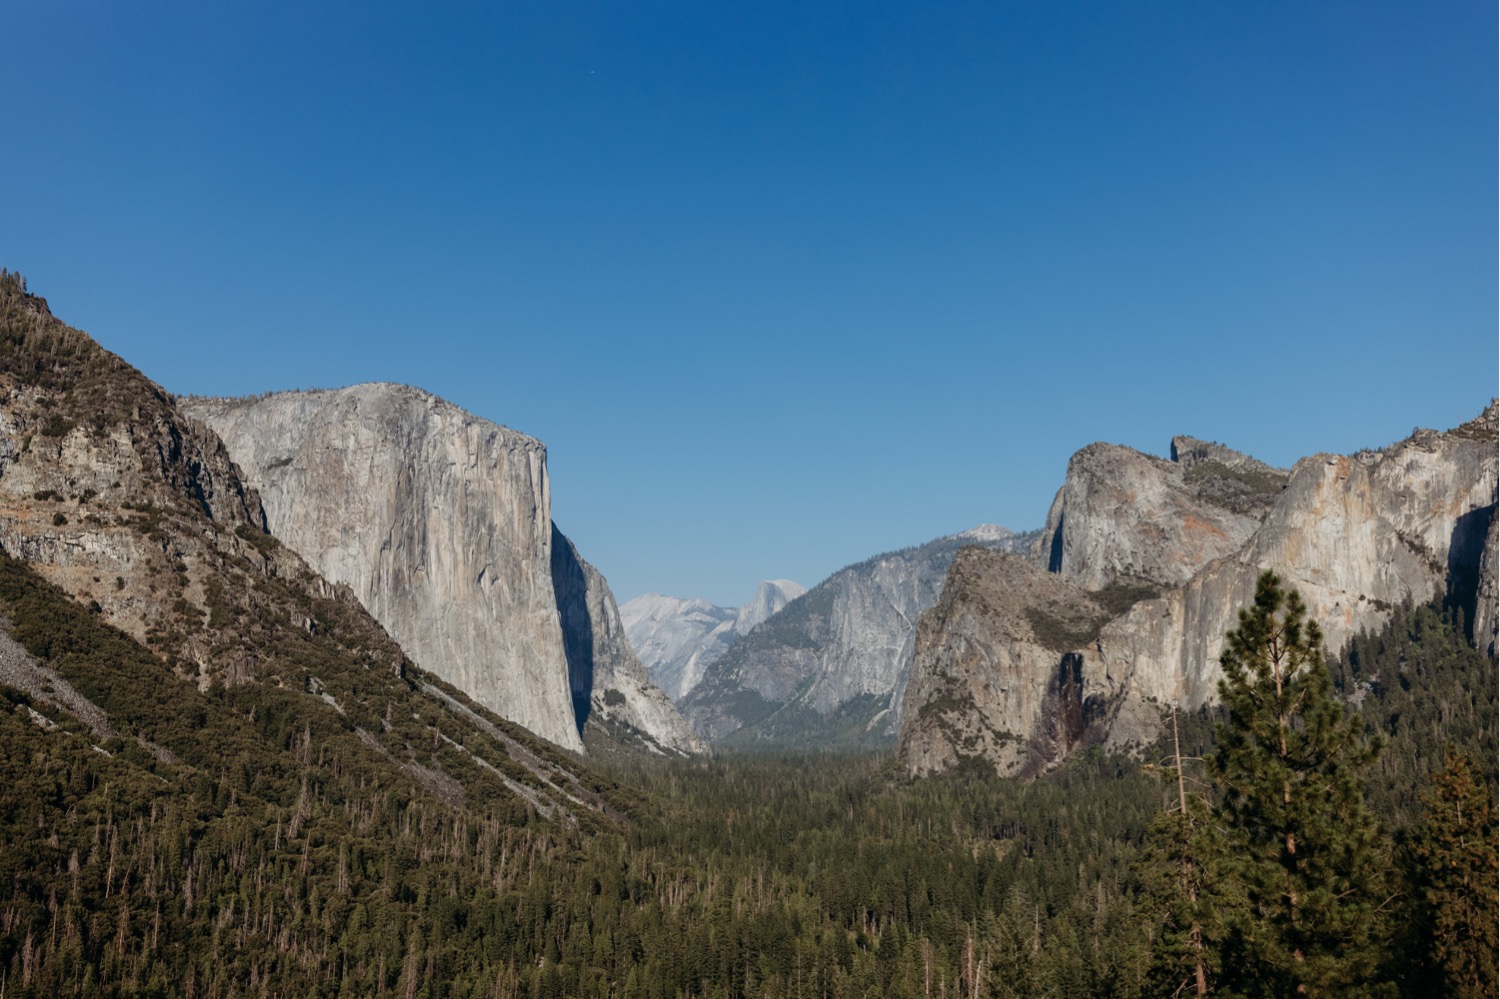 View of Yosemite Valley taken by Yosemite photographer Liz Koston